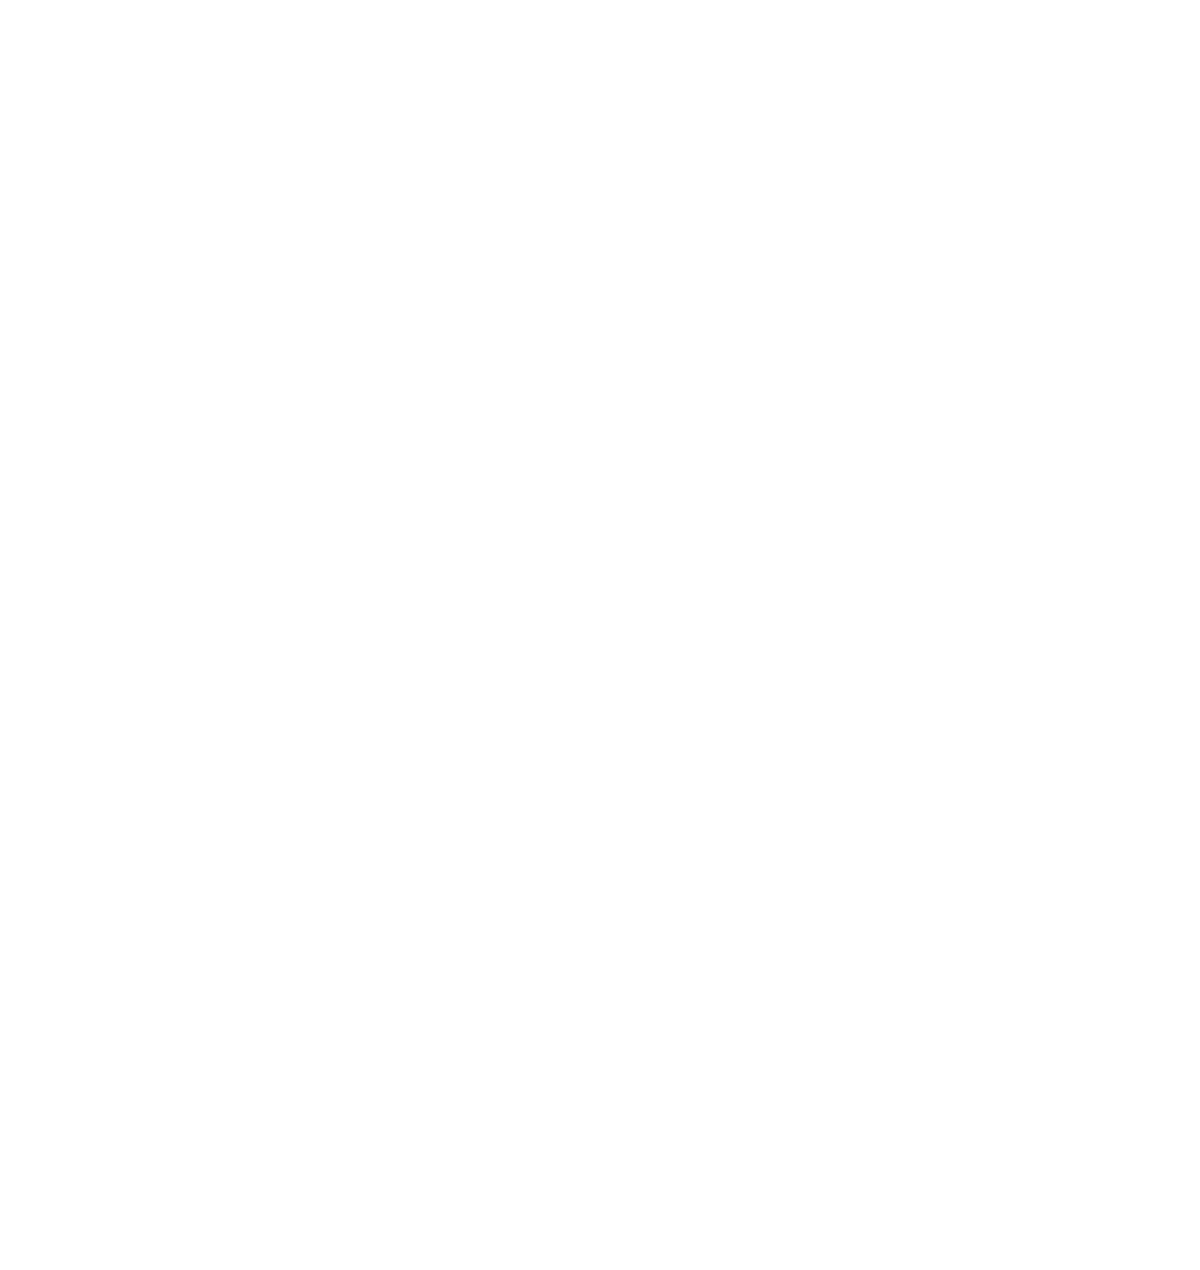 Co-operative logo